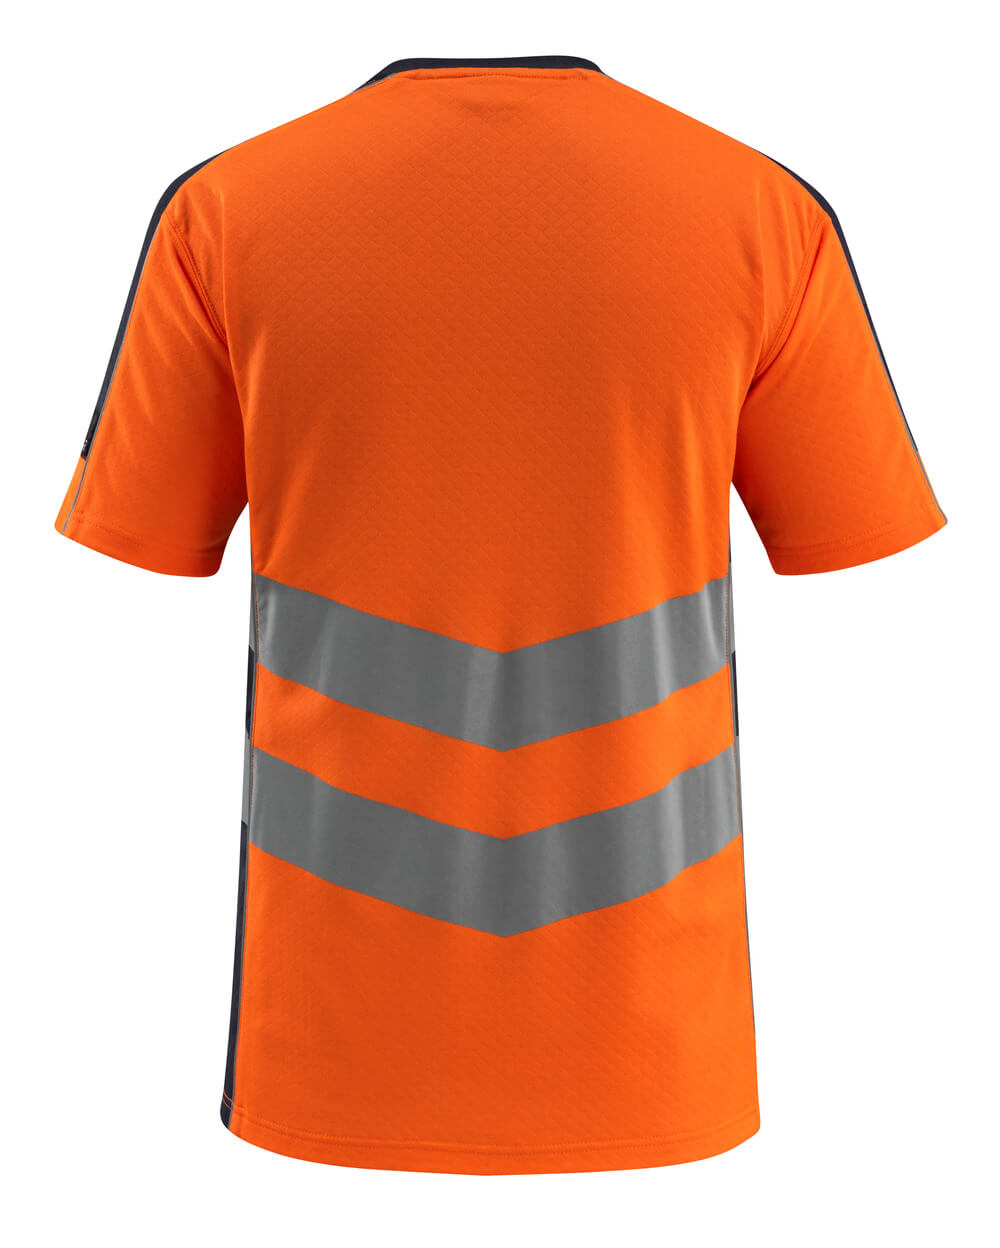 Mascot SAFE SUPREME  Sandwell T-shirt 50127 hi-vis orange/dark navy